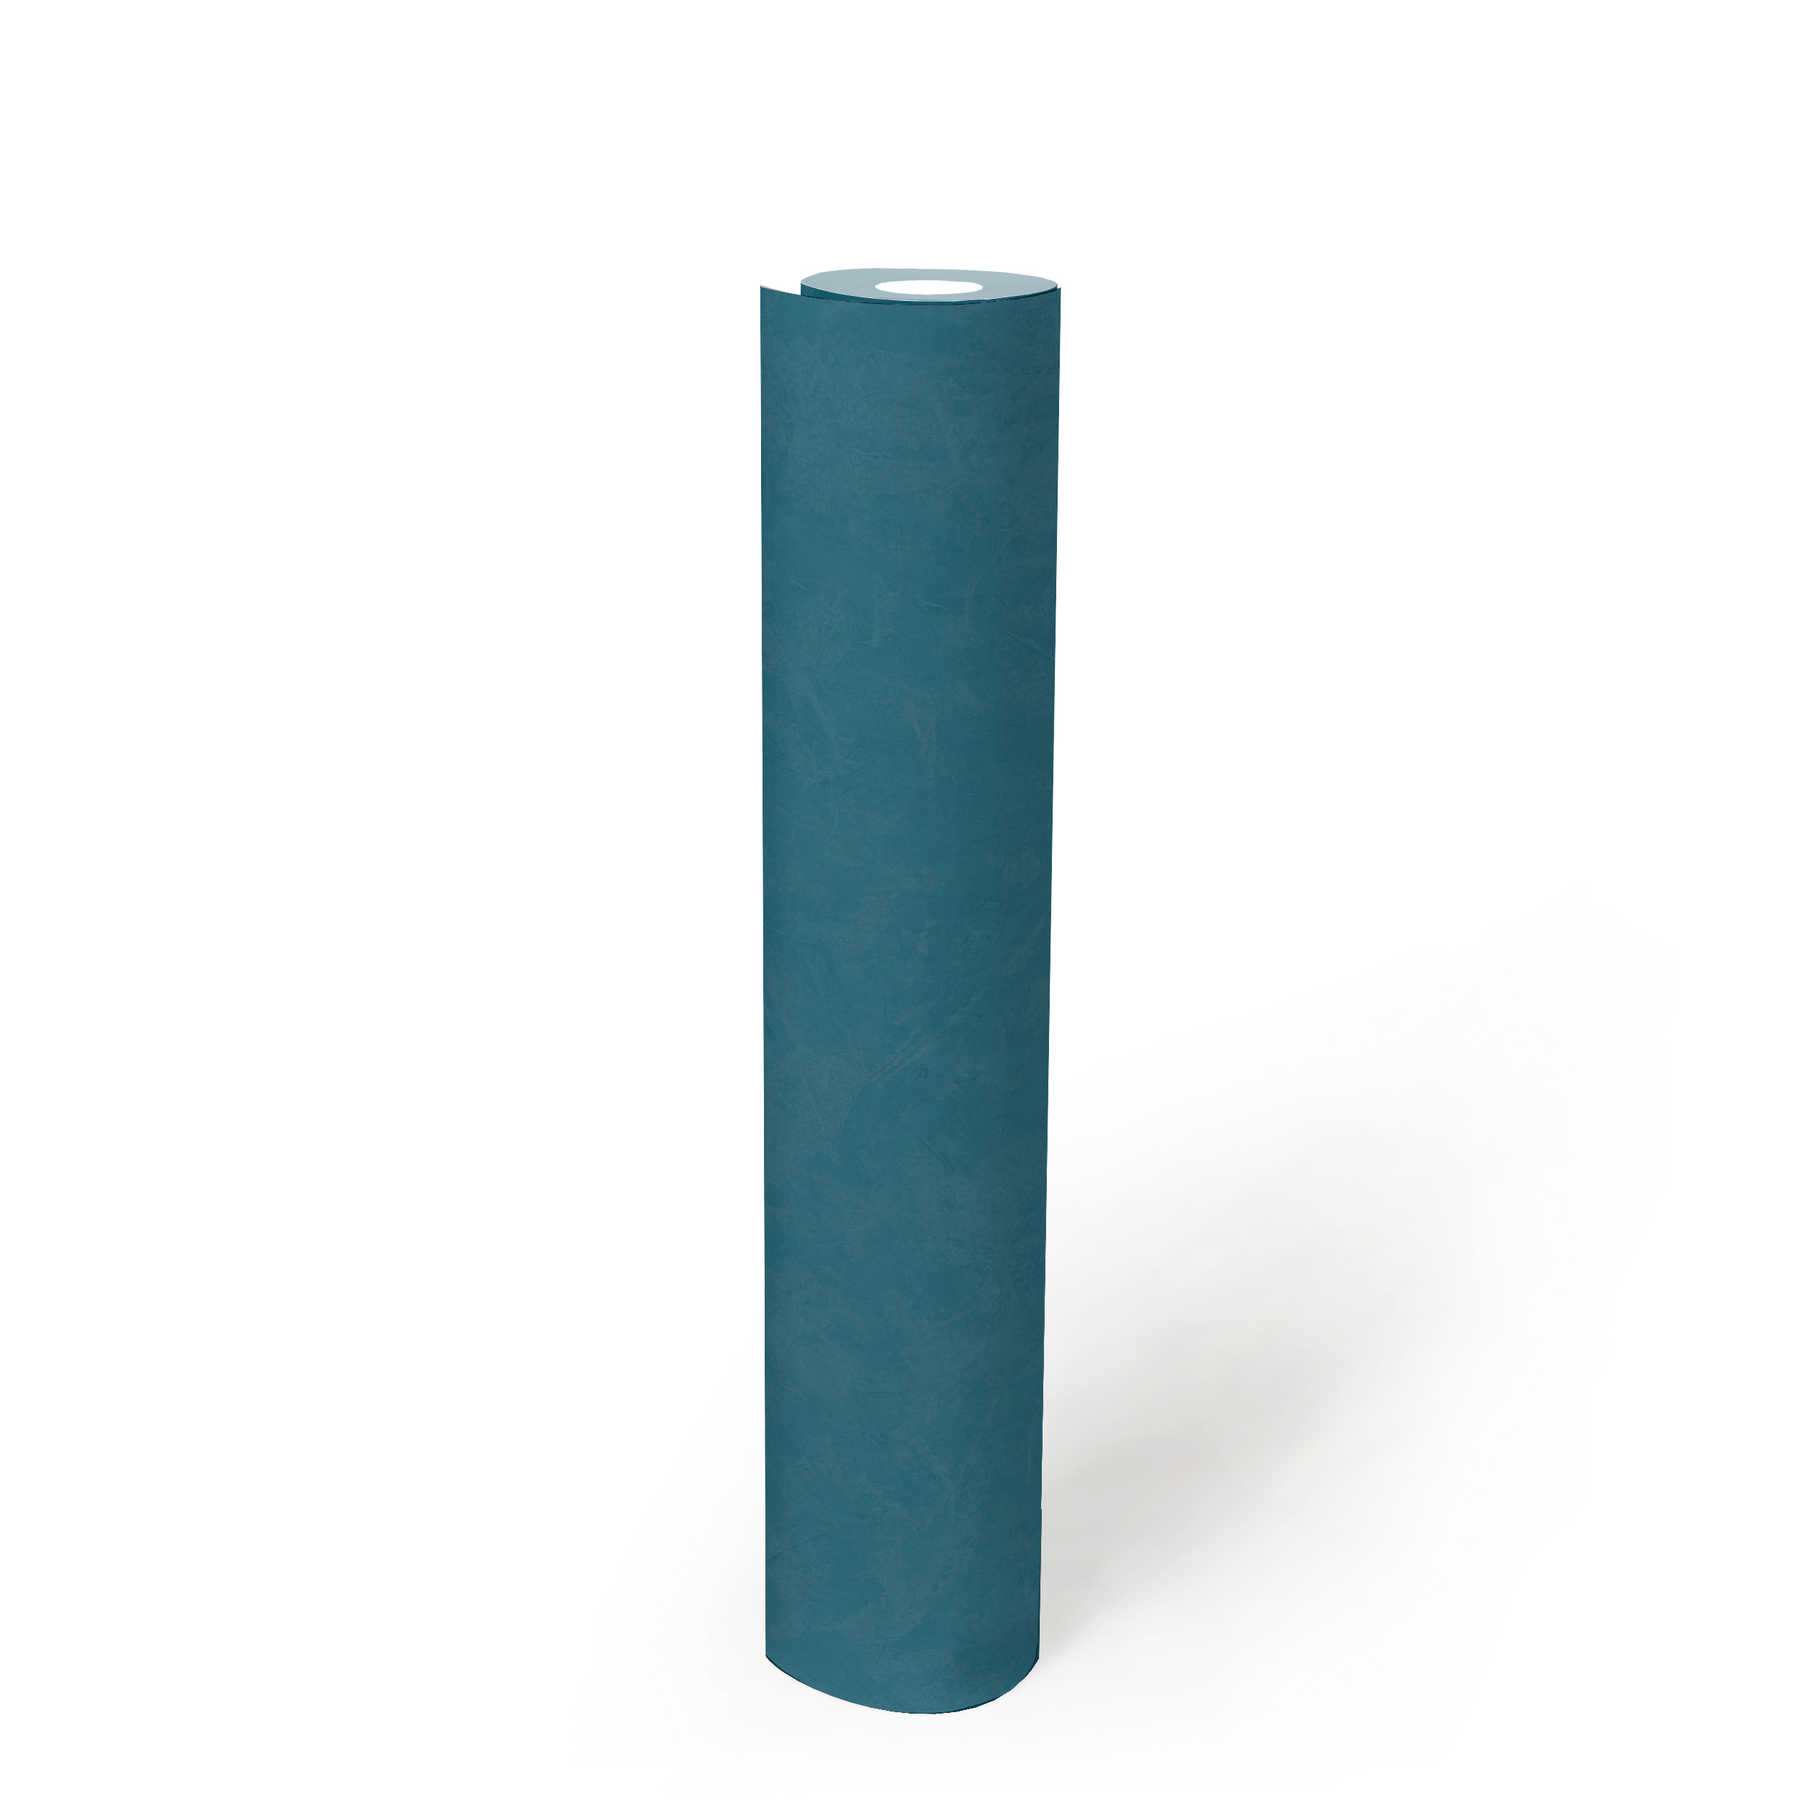             Effen vliesbehang met troffelpleisterlook - blauw, petrol
        